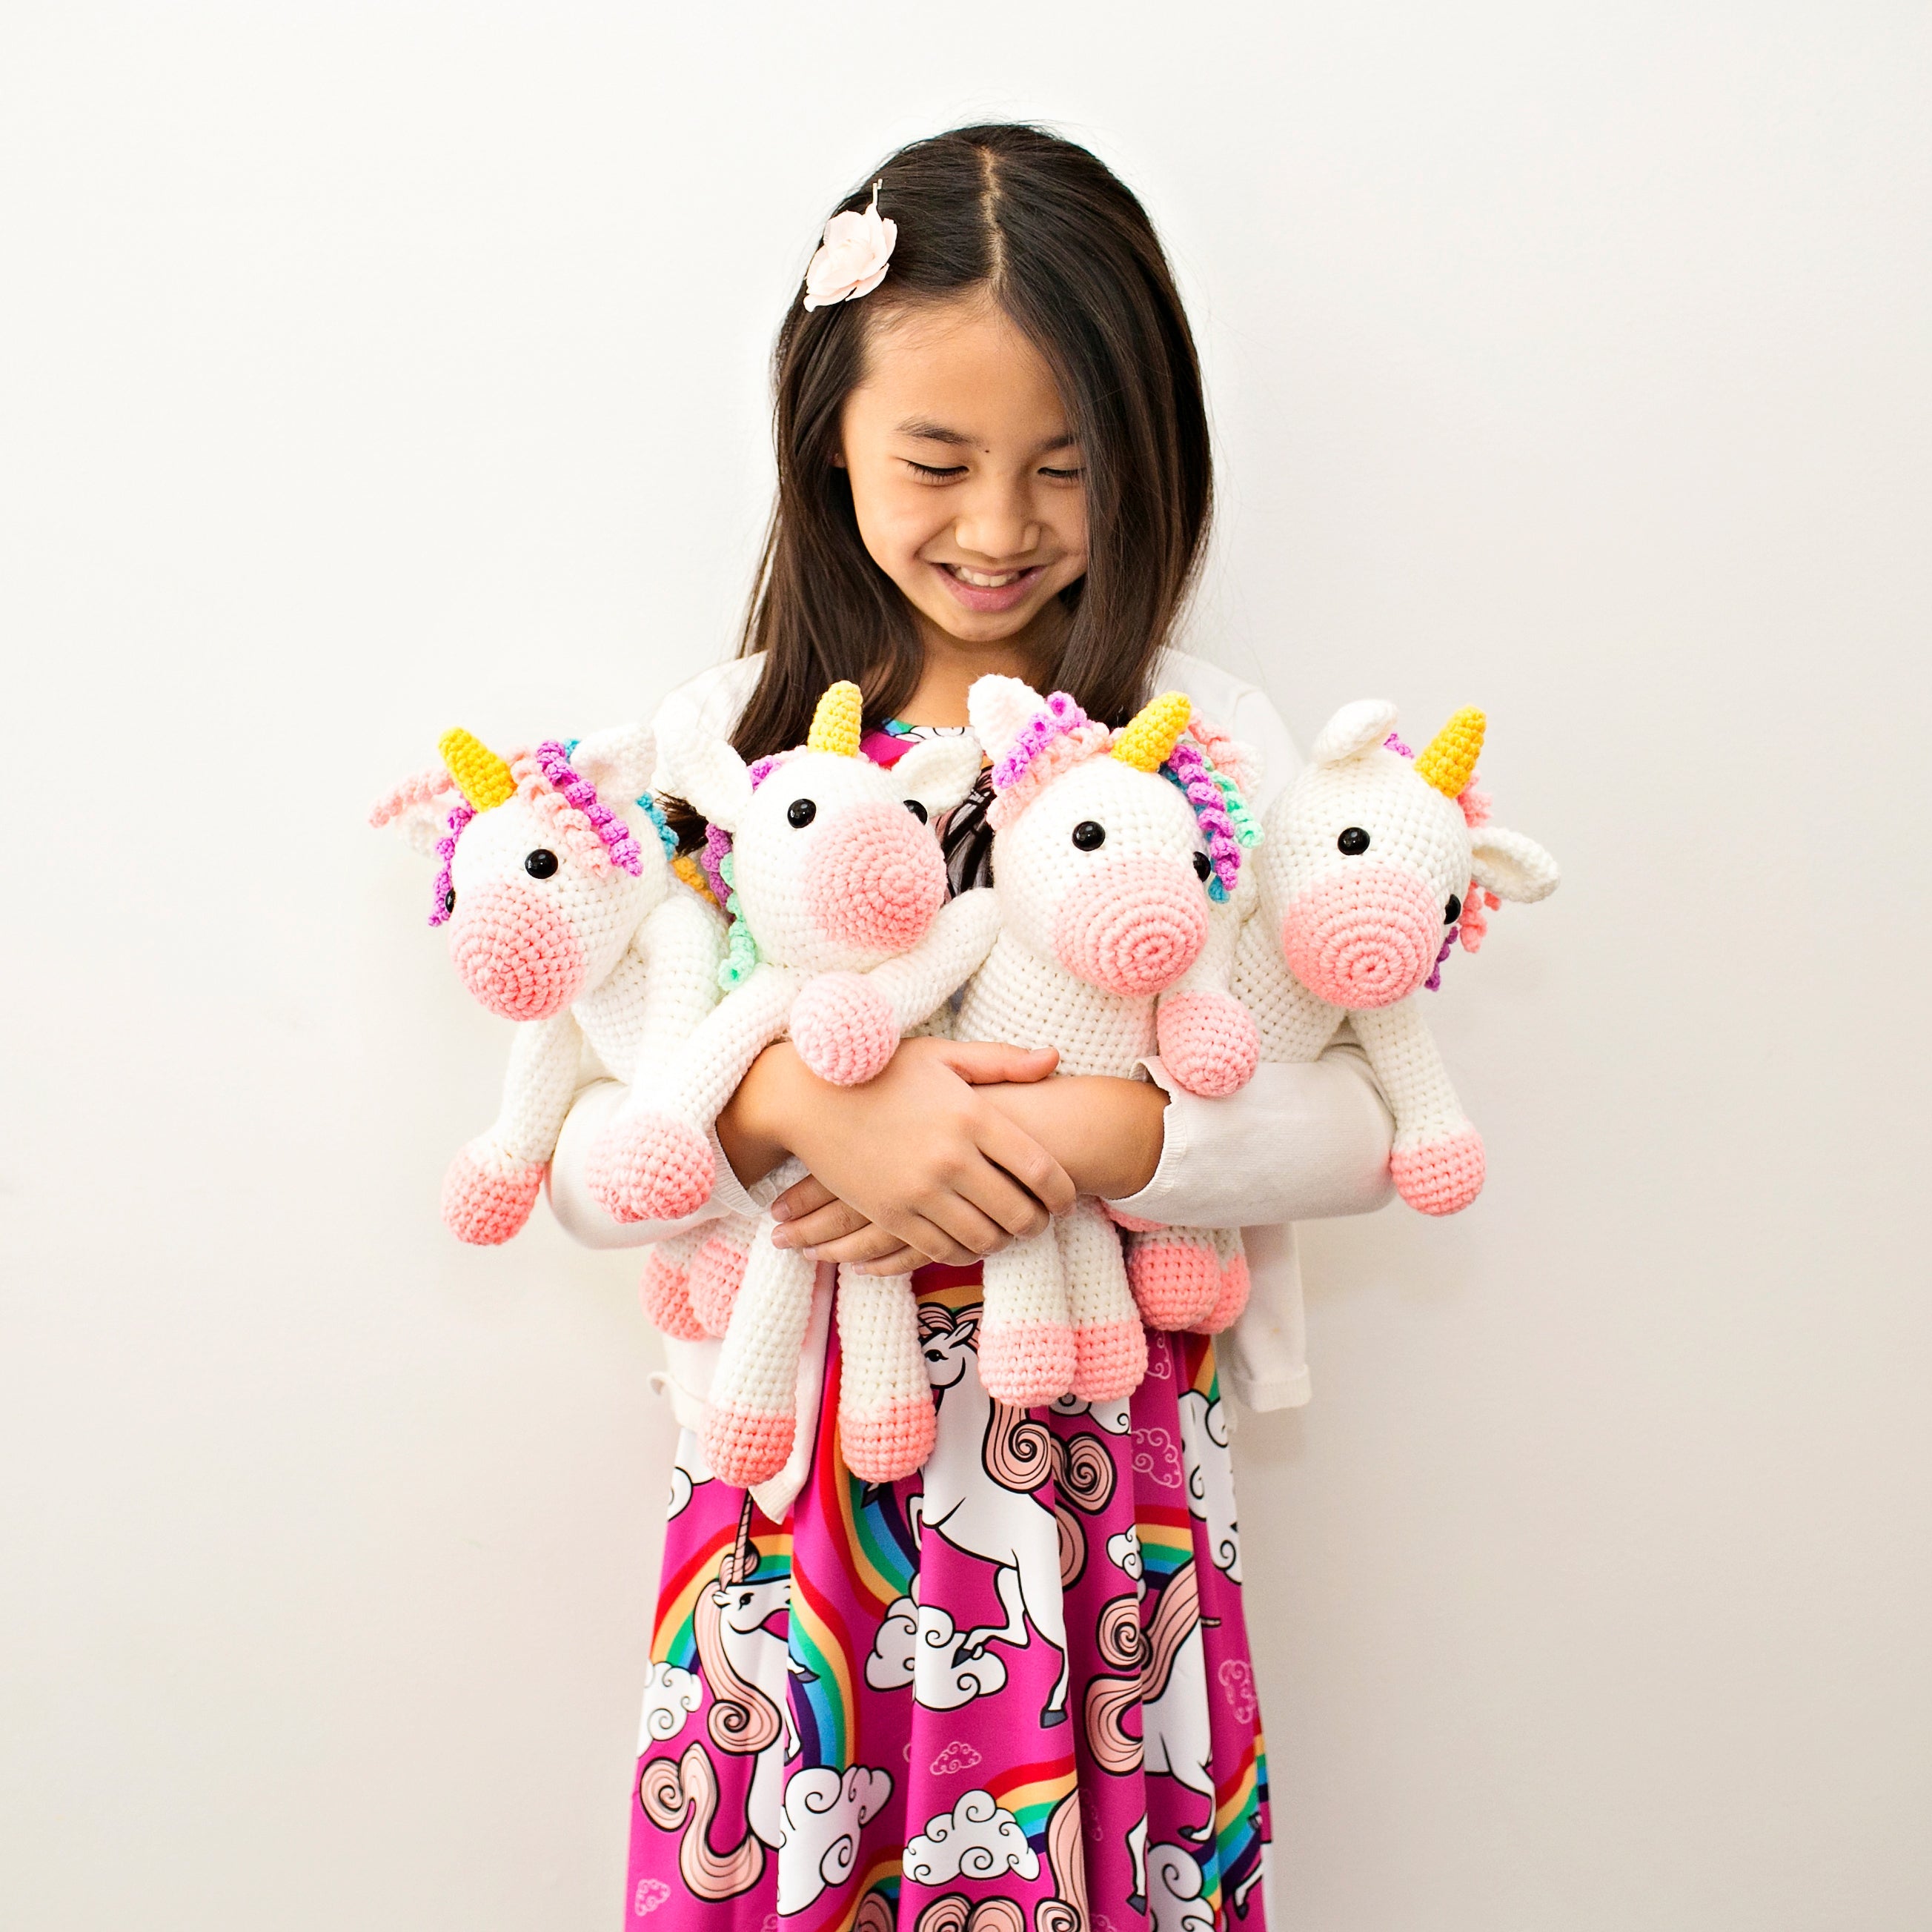 Twinks Unicorn Crochet Doll - Slightly Imperfect